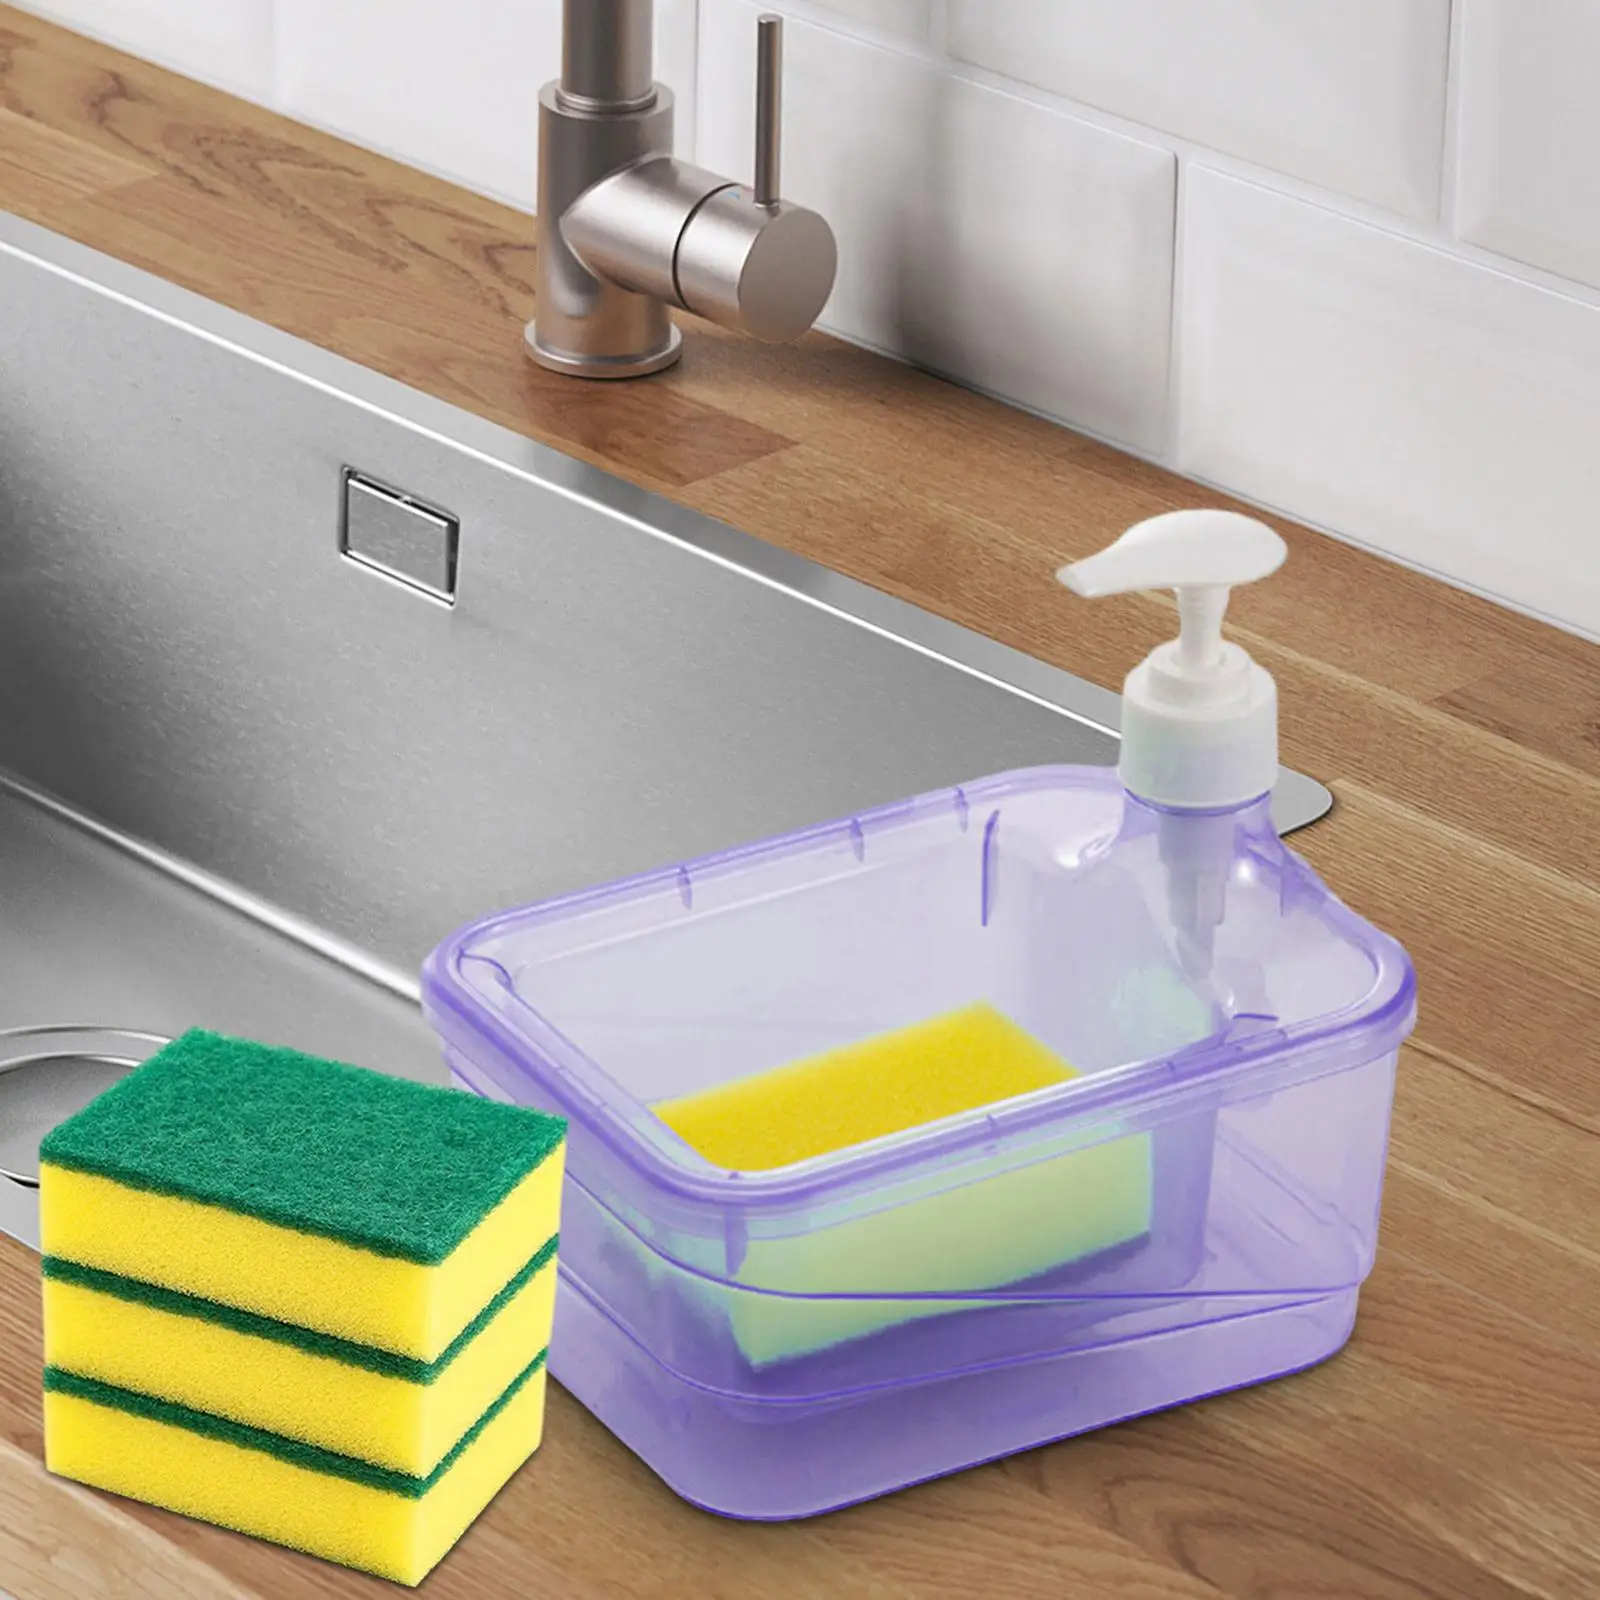 Dish Soap Dispenser and Sponge Holder Multifunctional Anti Slip Liquid Pump Bottle Sink Countertop Organizer for Bathroom Home